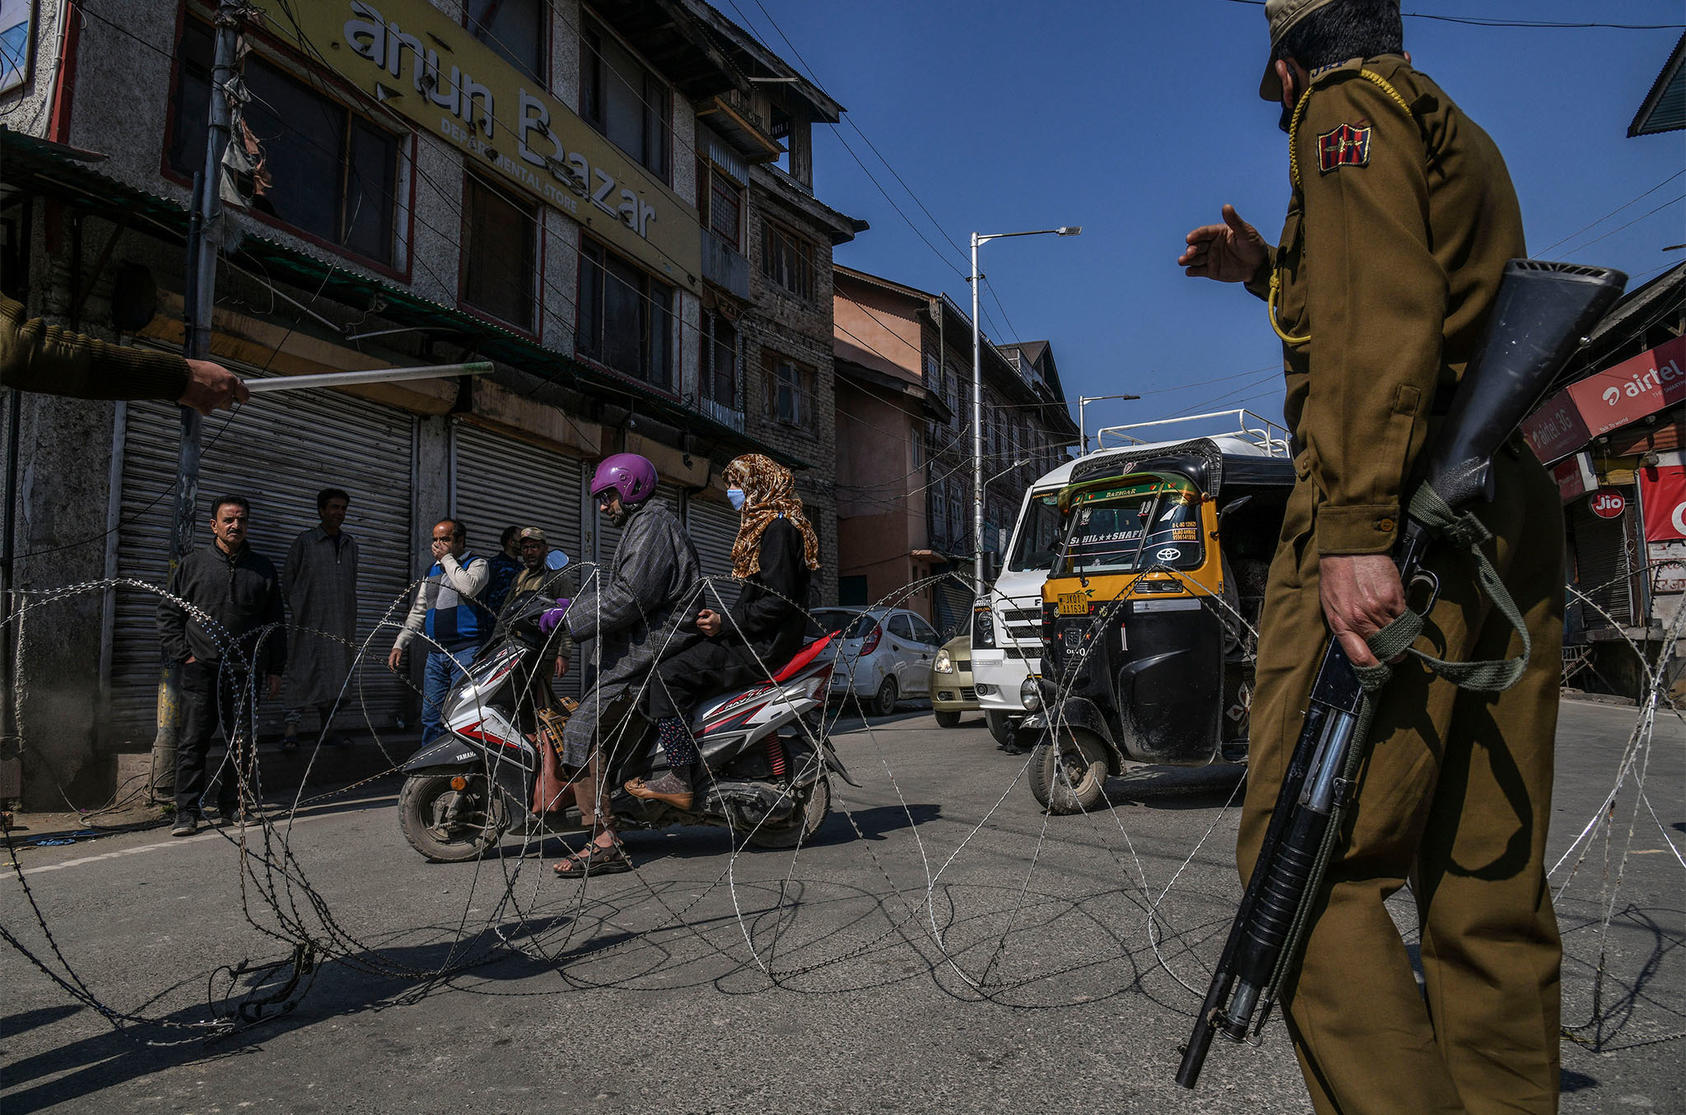 A roadblock in Srinagar, India, on March 19, 2020. (Atul Loke/The New York Times)